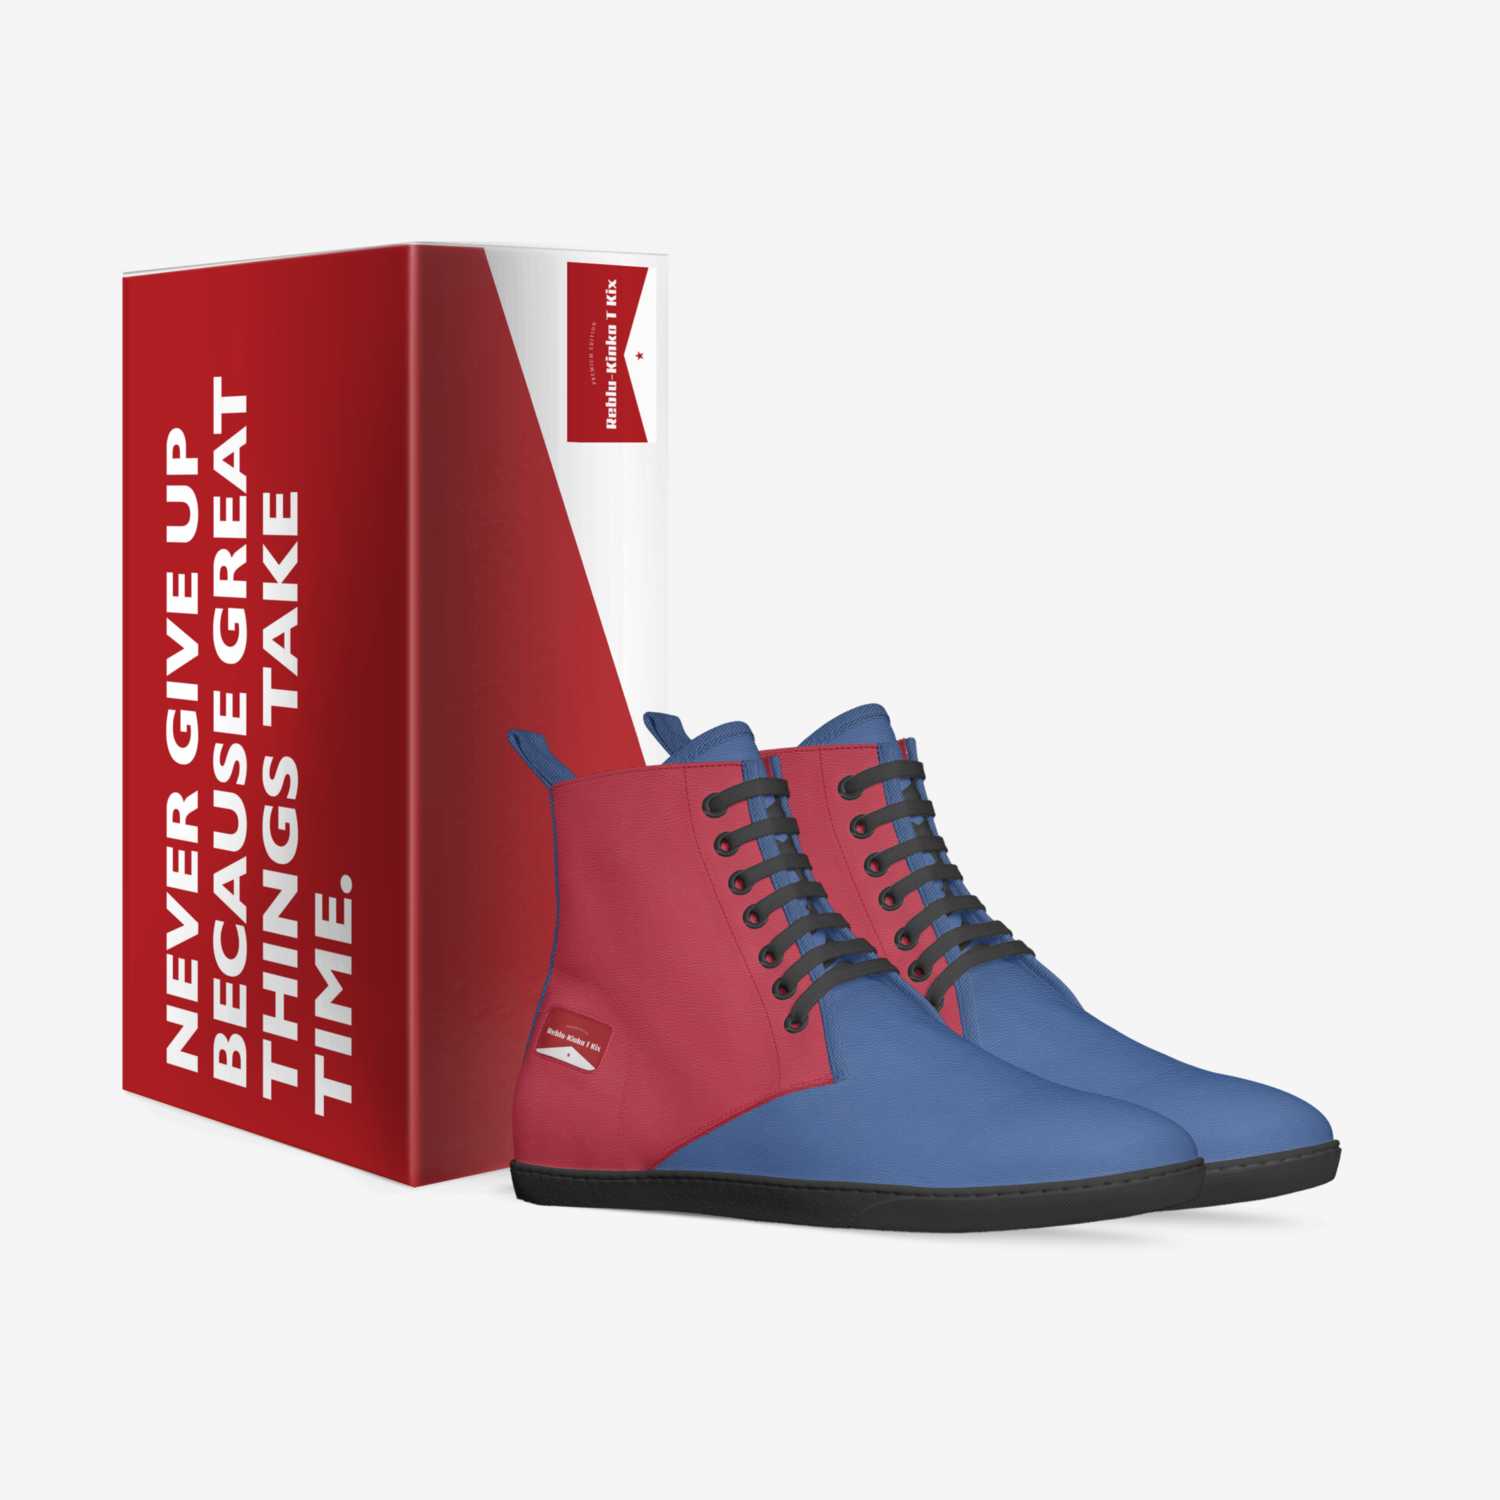 Reblu-Kinka T Kix custom made in Italy shoes by Kinka T Kix | Box view